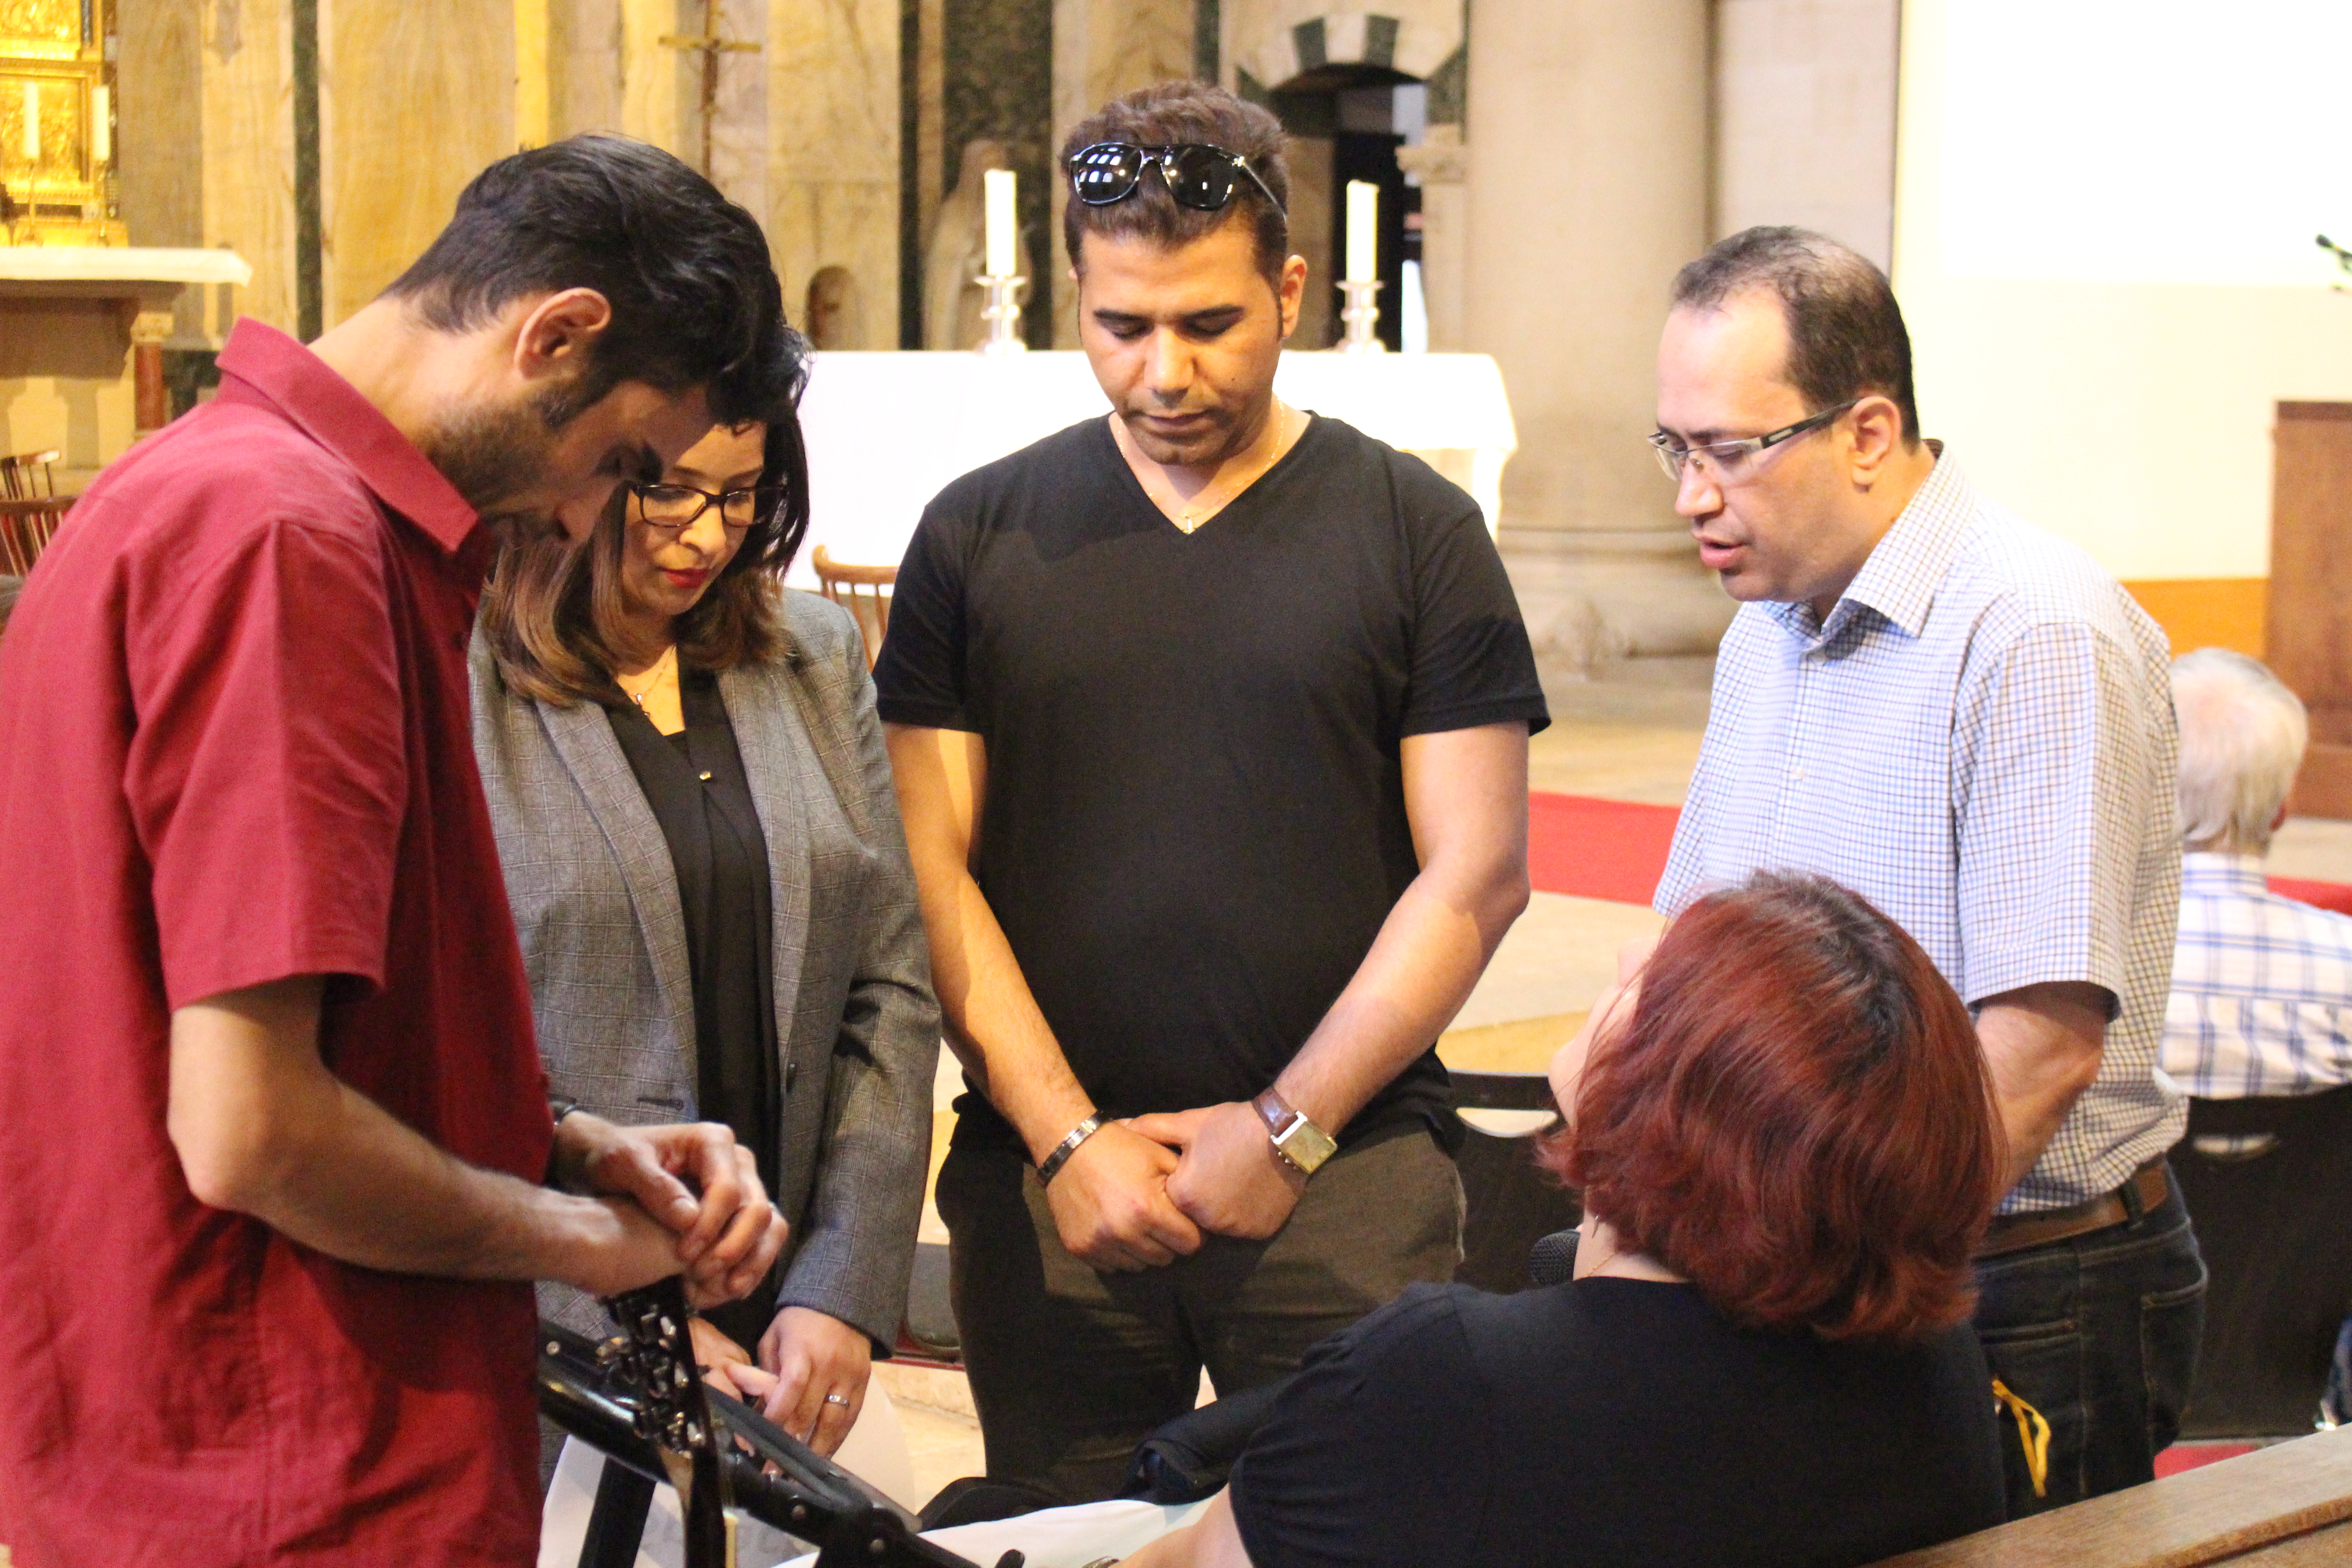 The leadership group of the Iranian Presbyterian Church Berlin praying before leading a prayer service.